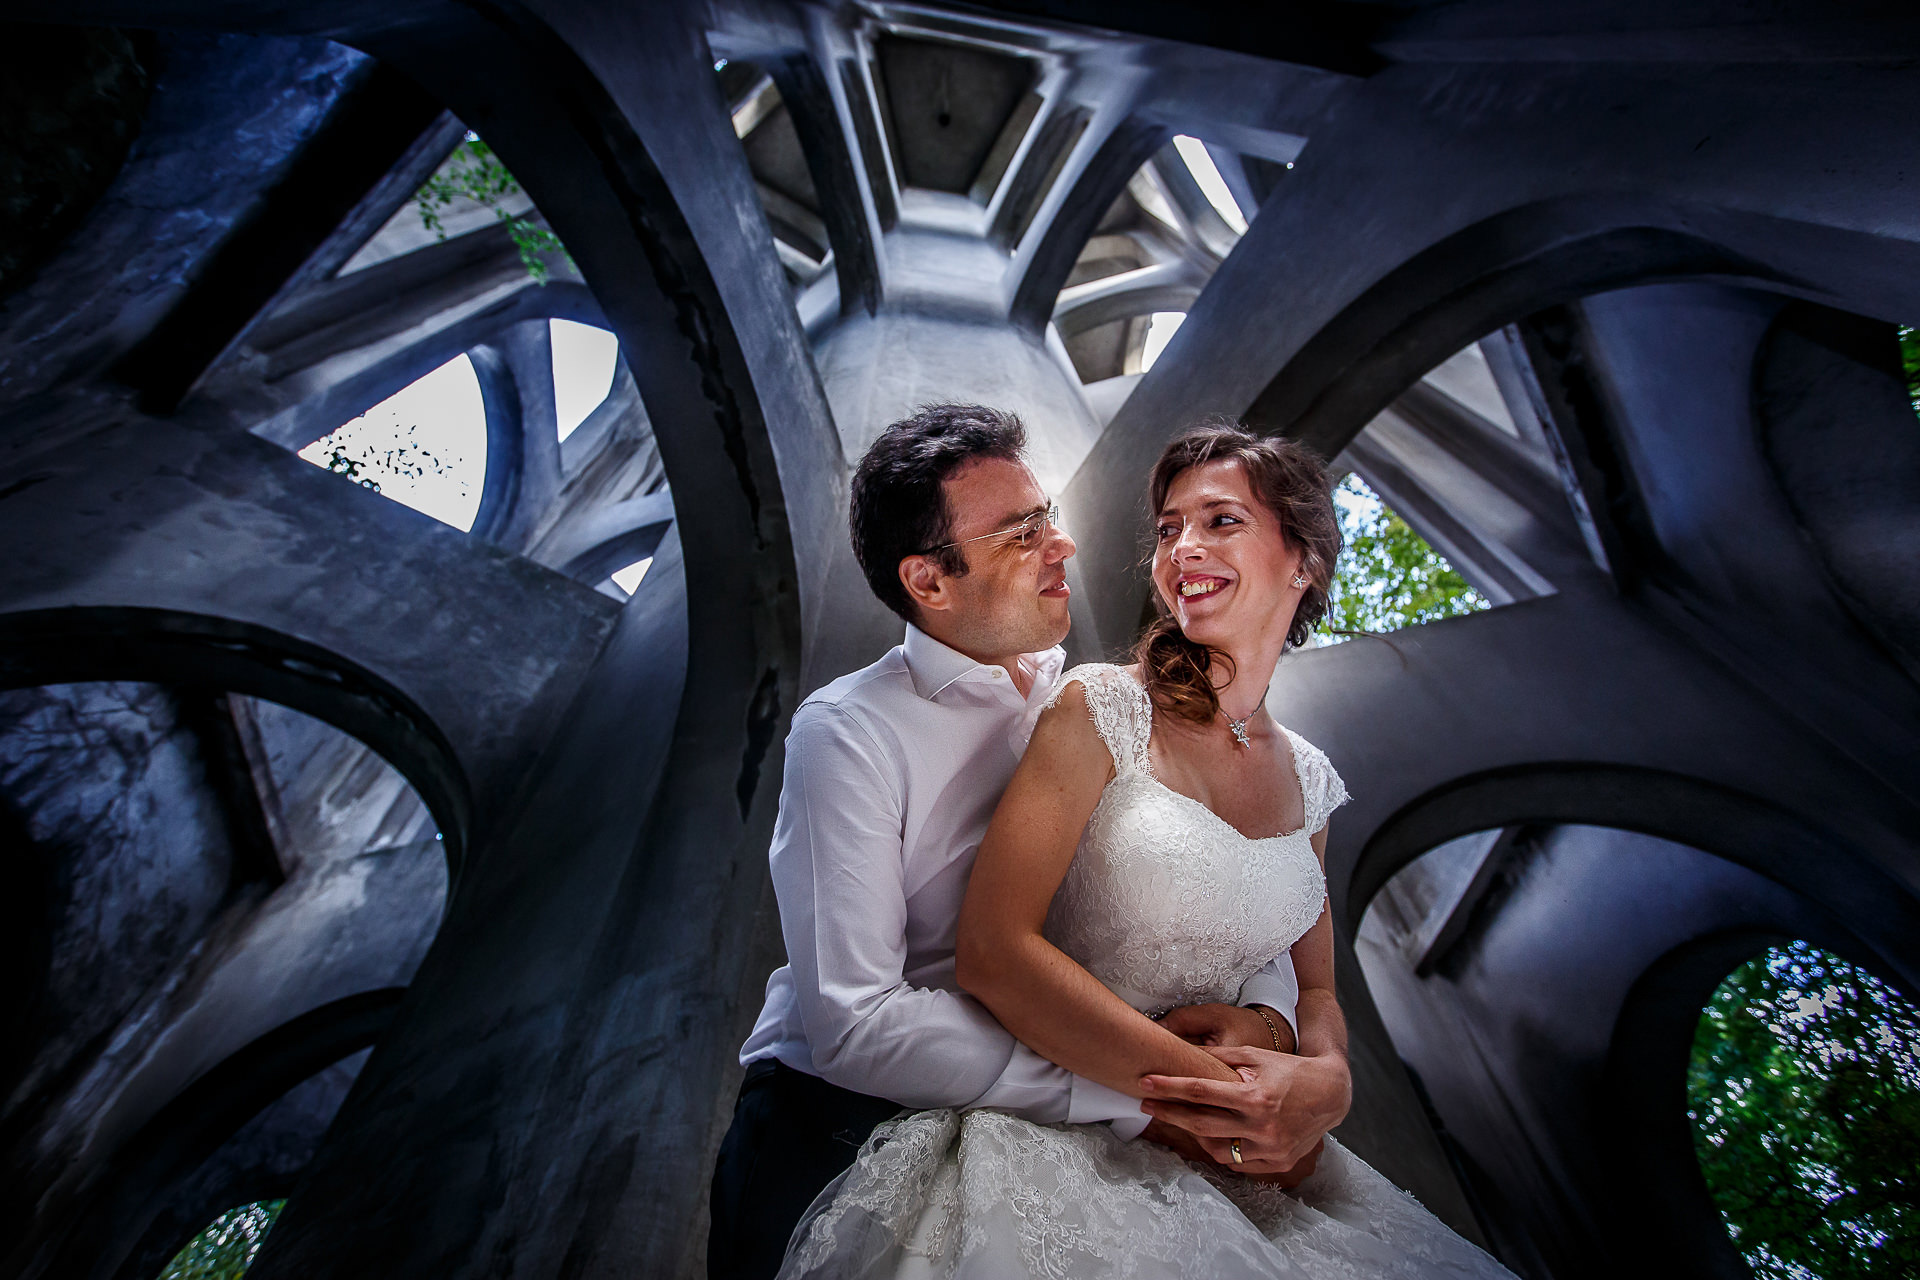 After wedding session - Buftea, Romania - Mihai Zaharia Photography - Destination wedding photographer - 11